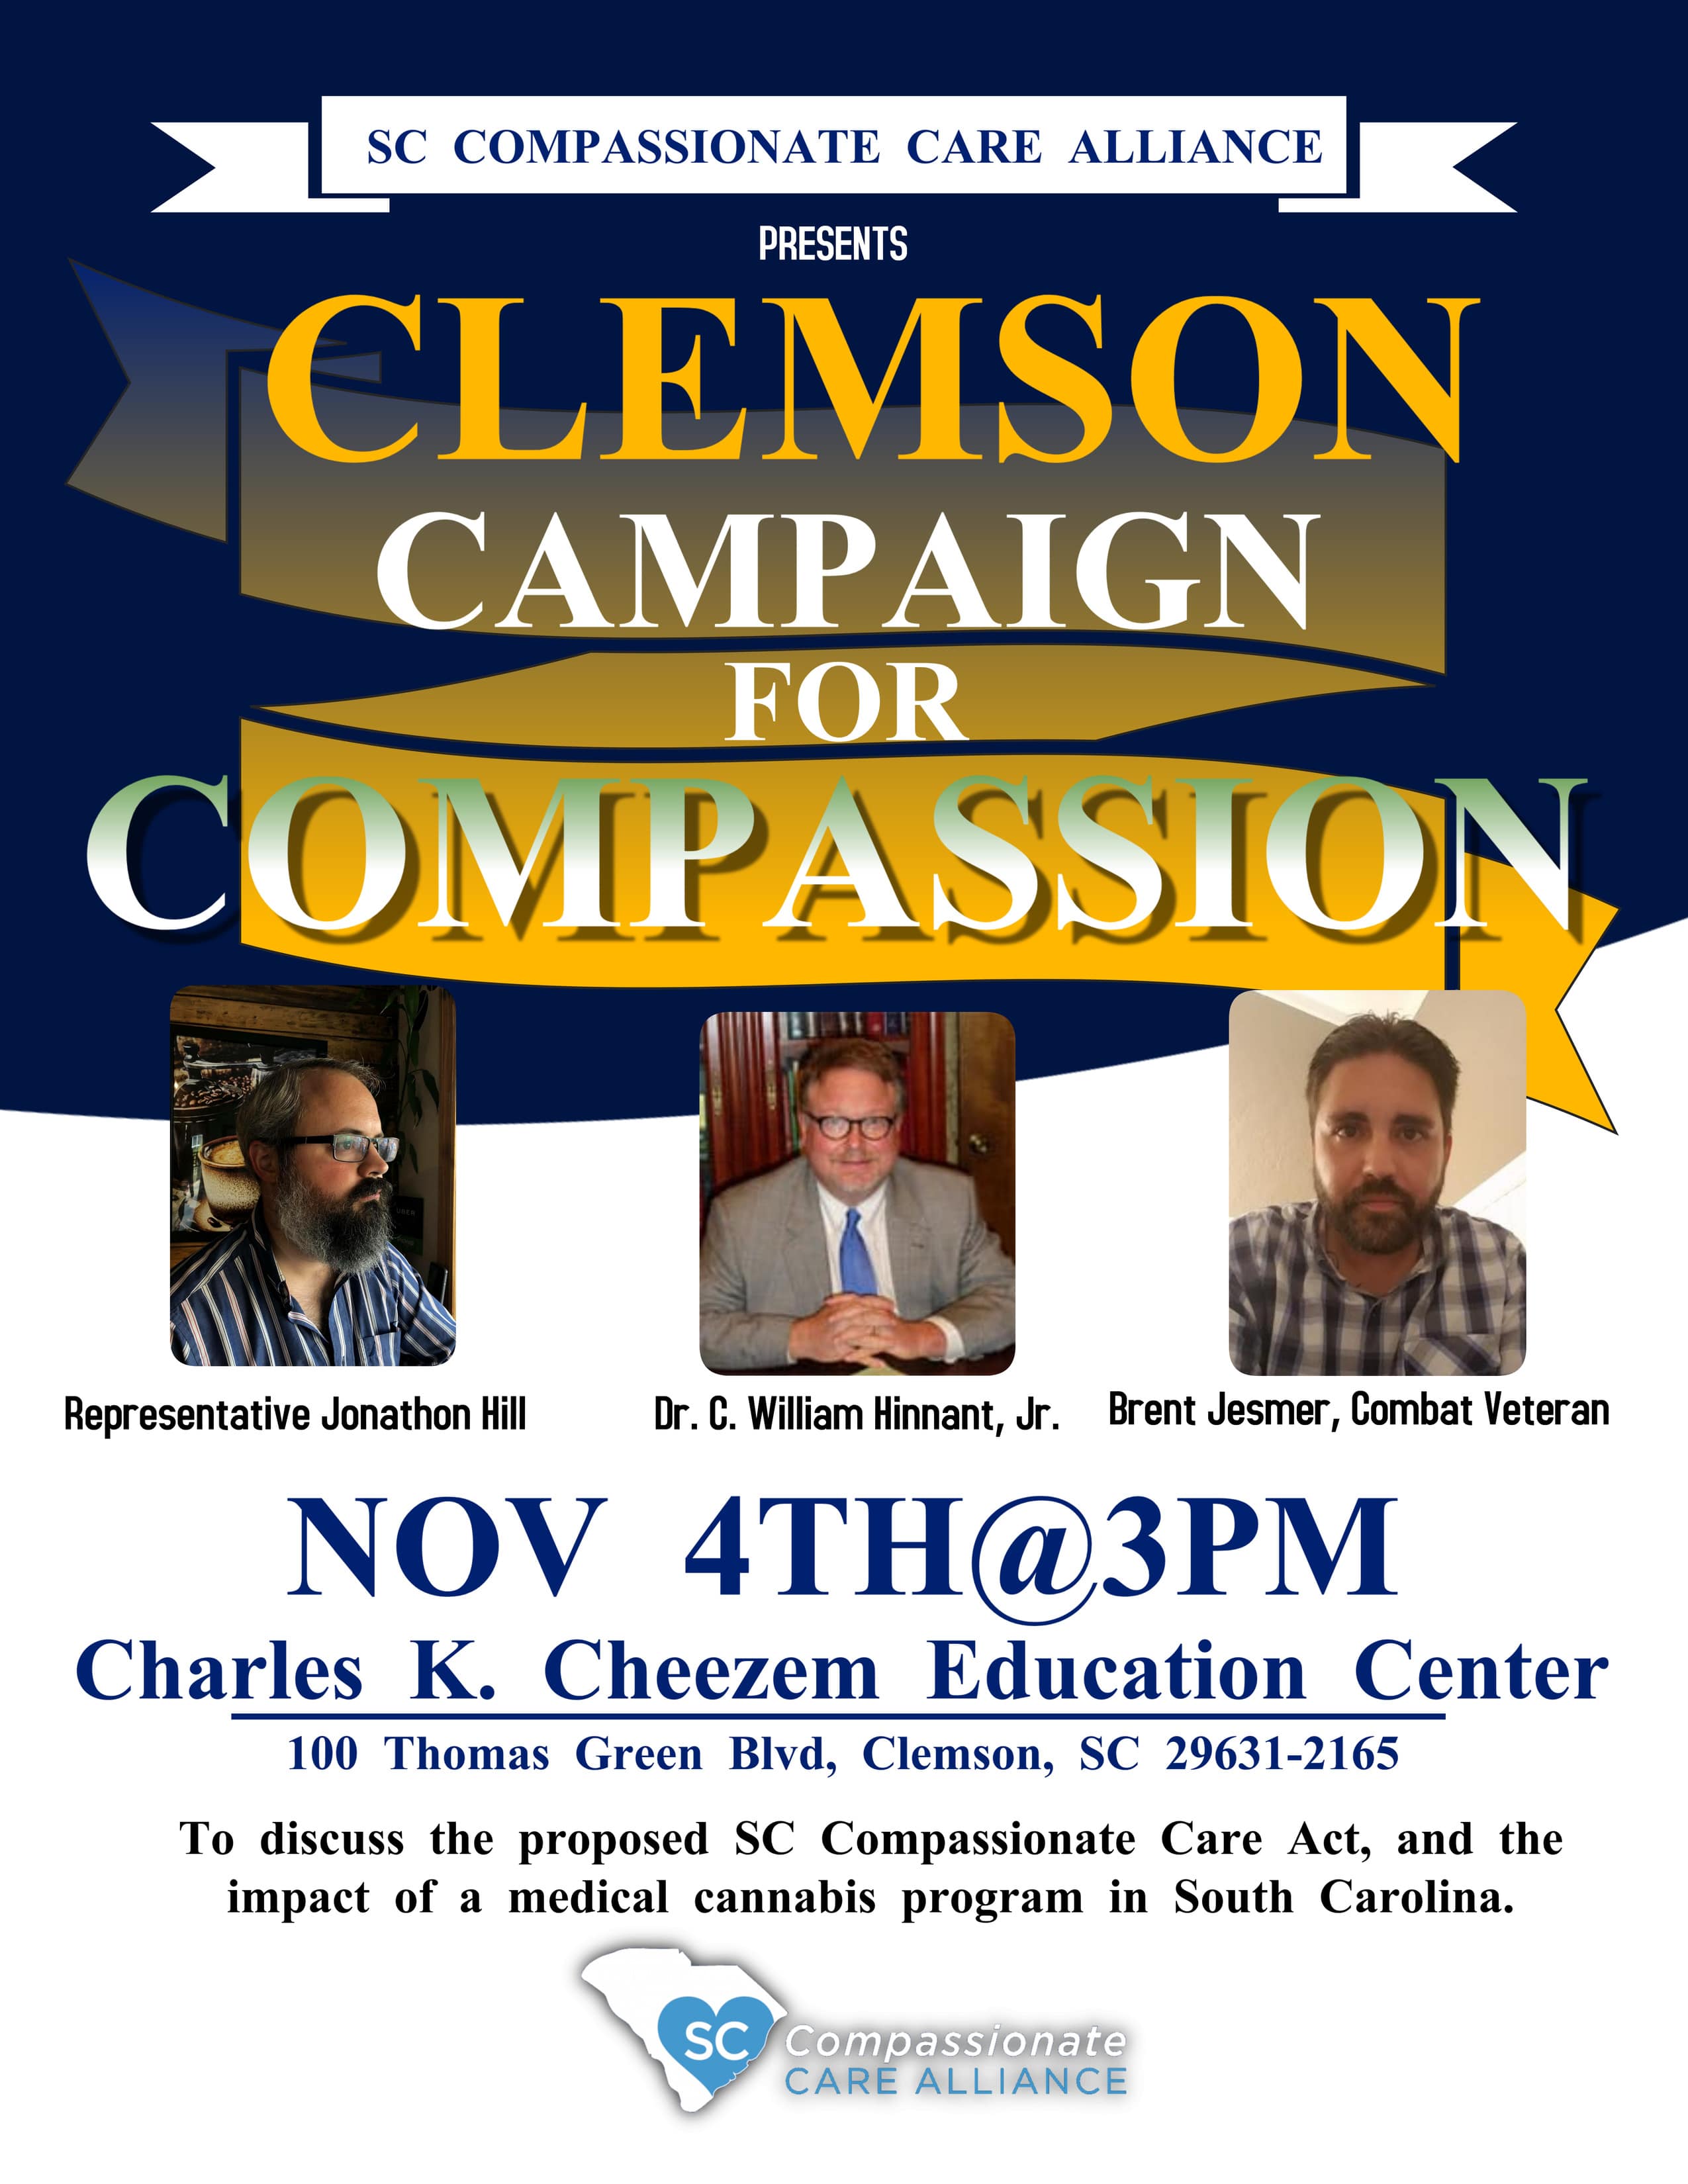 Clemson Campaign For Compassion SC Compassionate Care Alliance